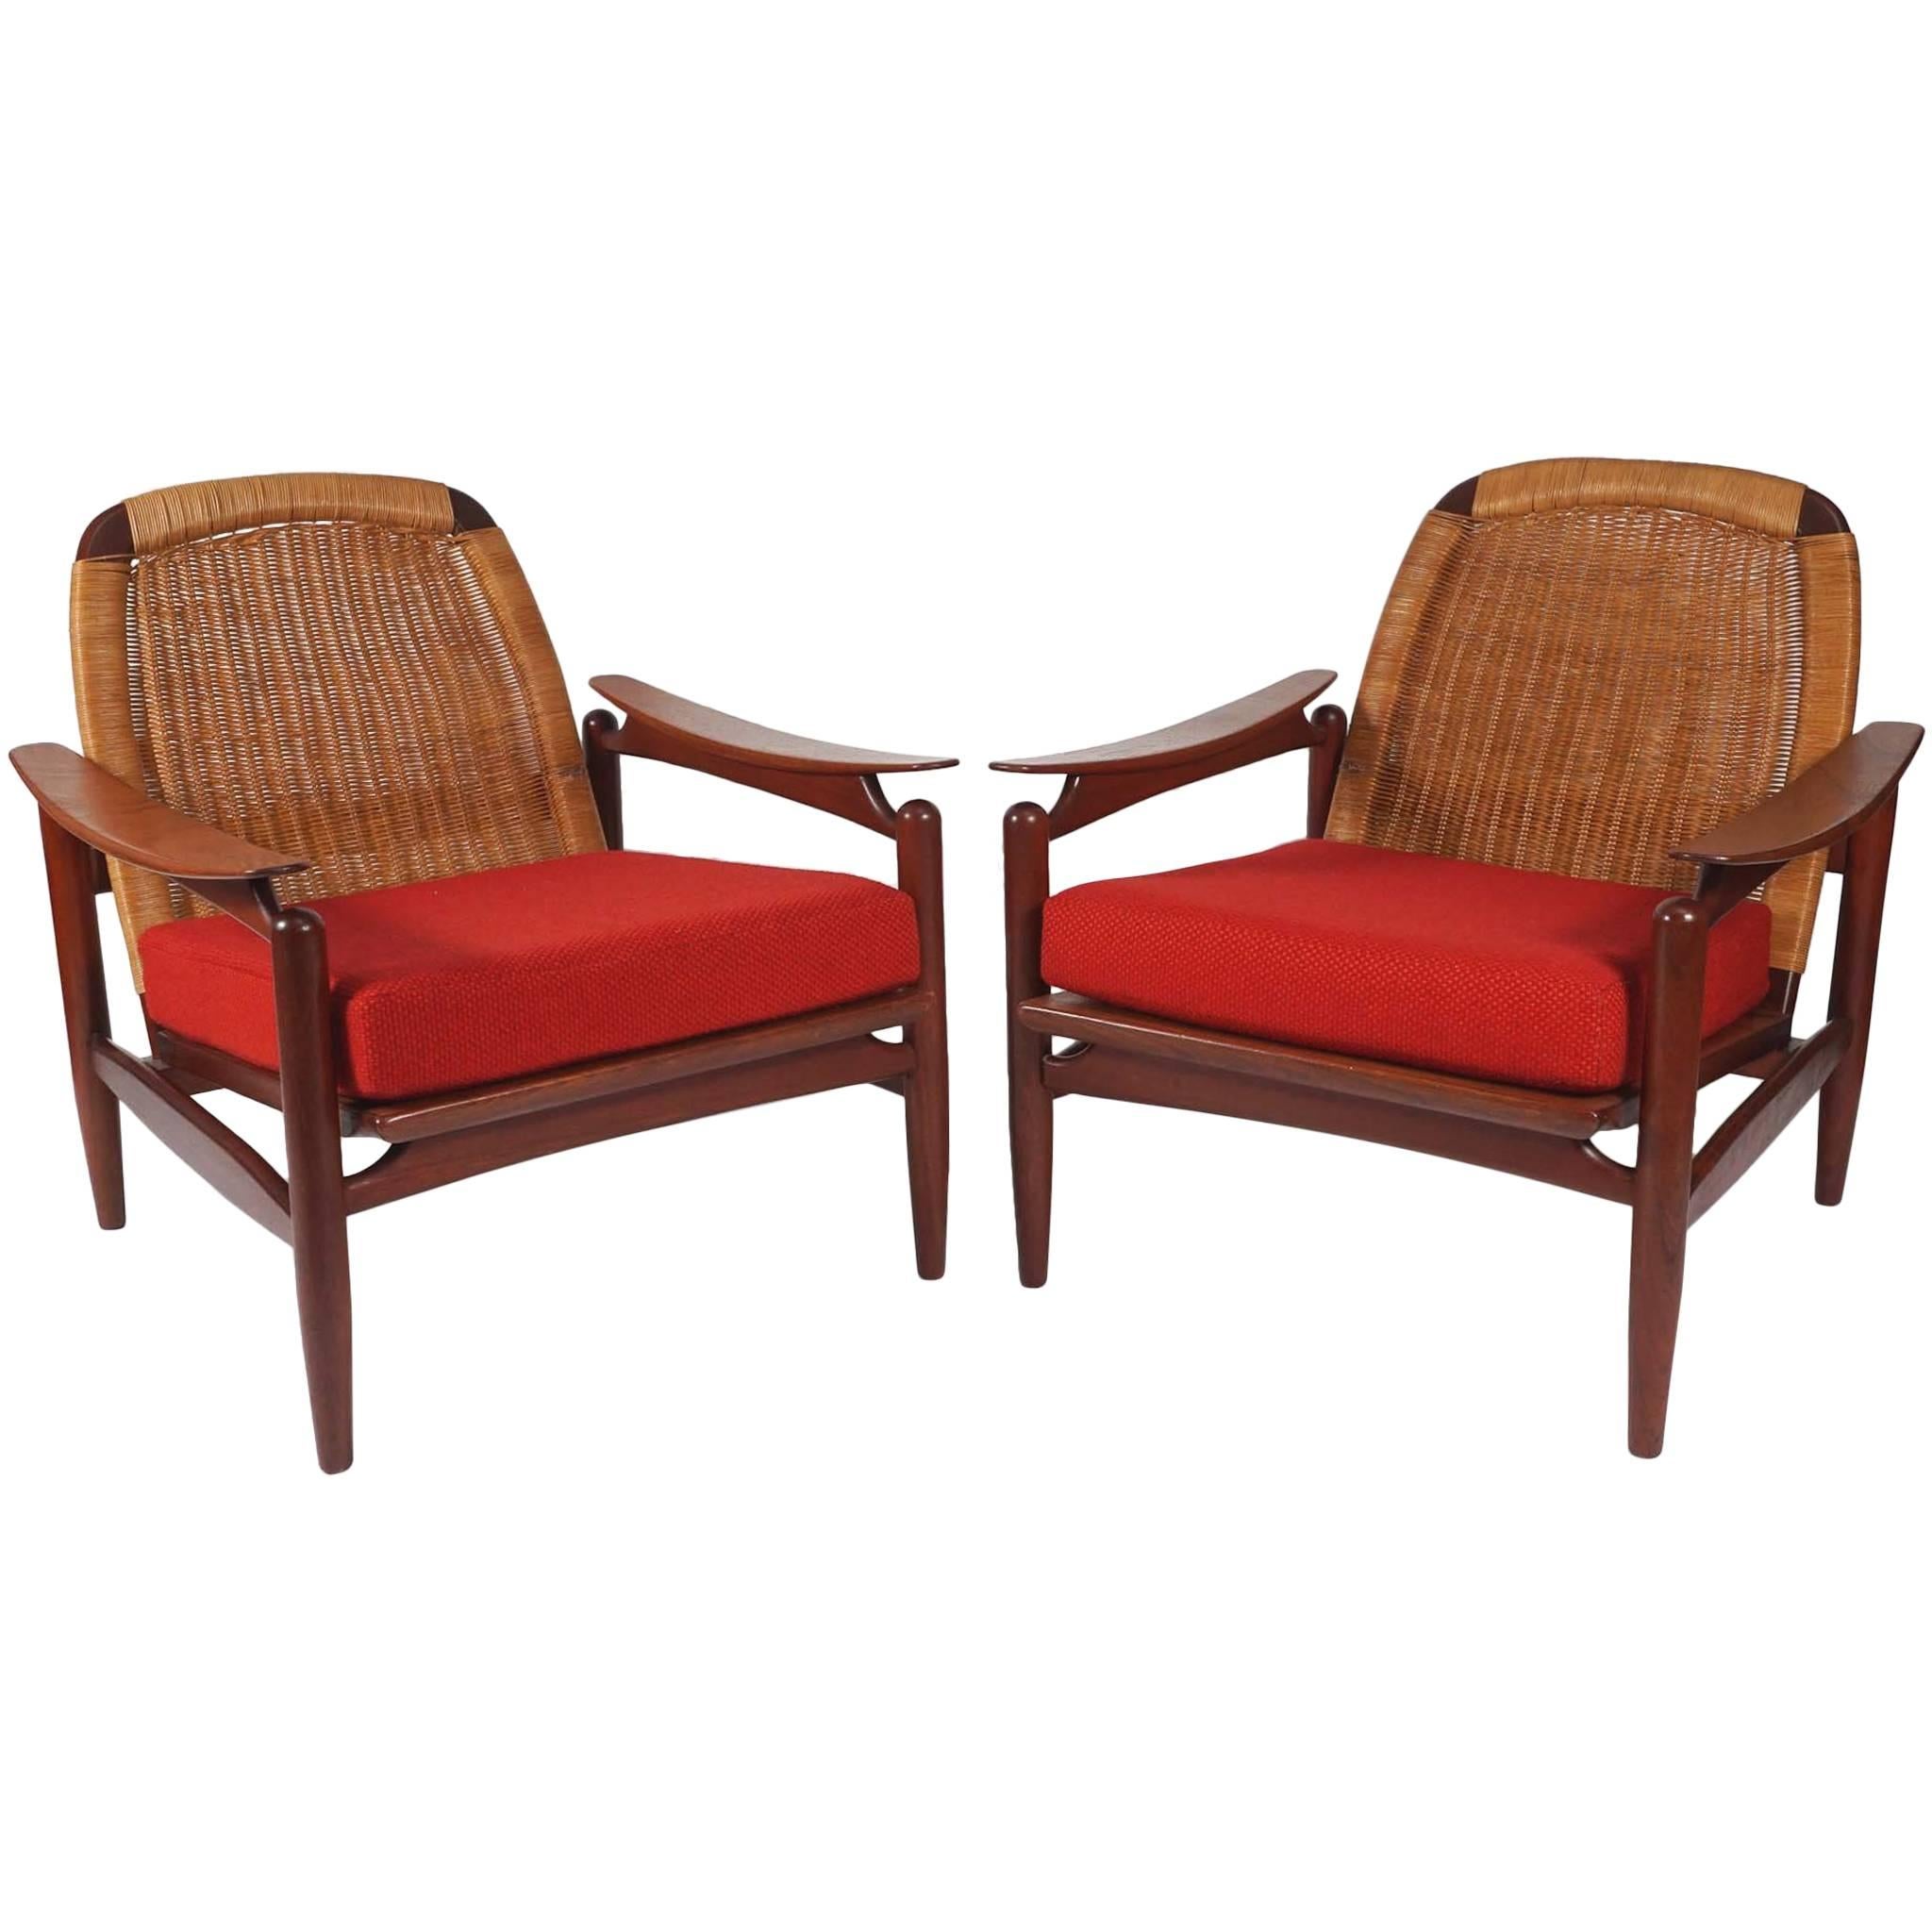 Pair of Danish Modern Lounge Chairs